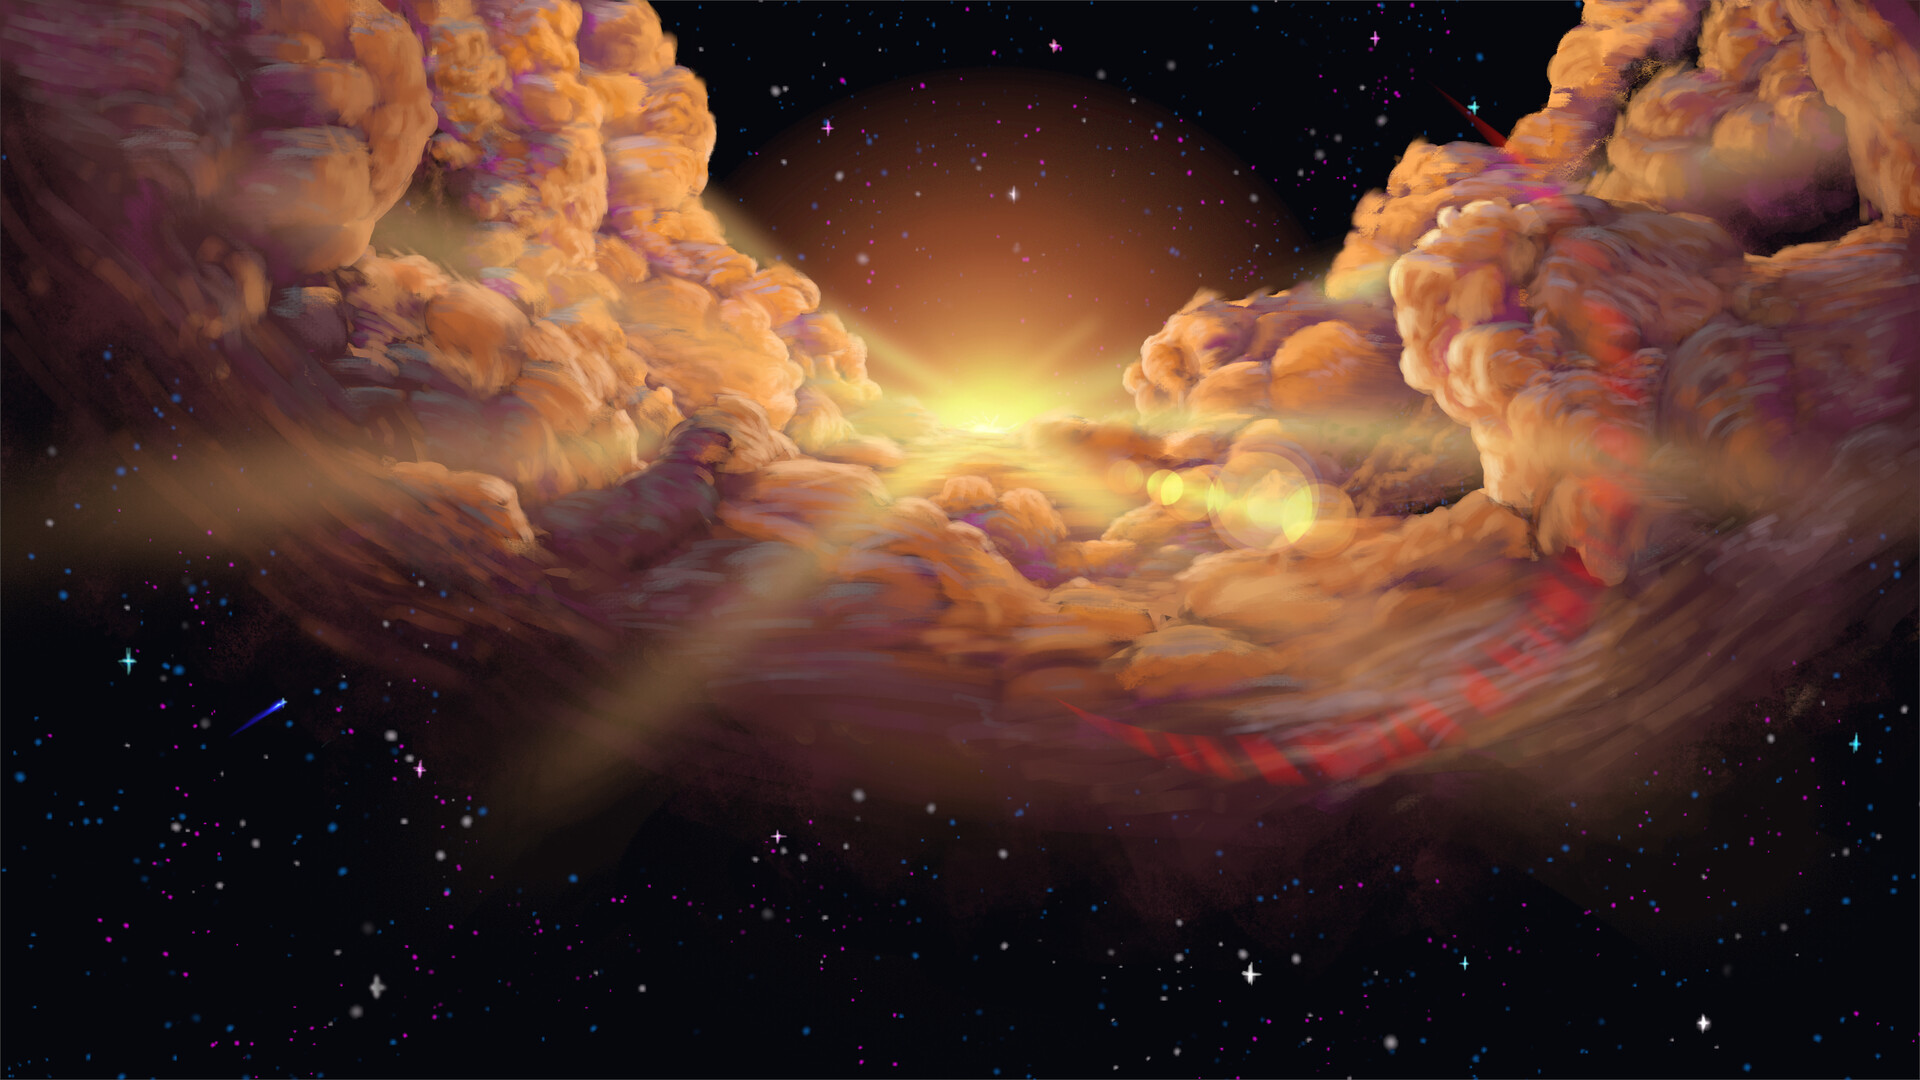 Cosmic Cloud